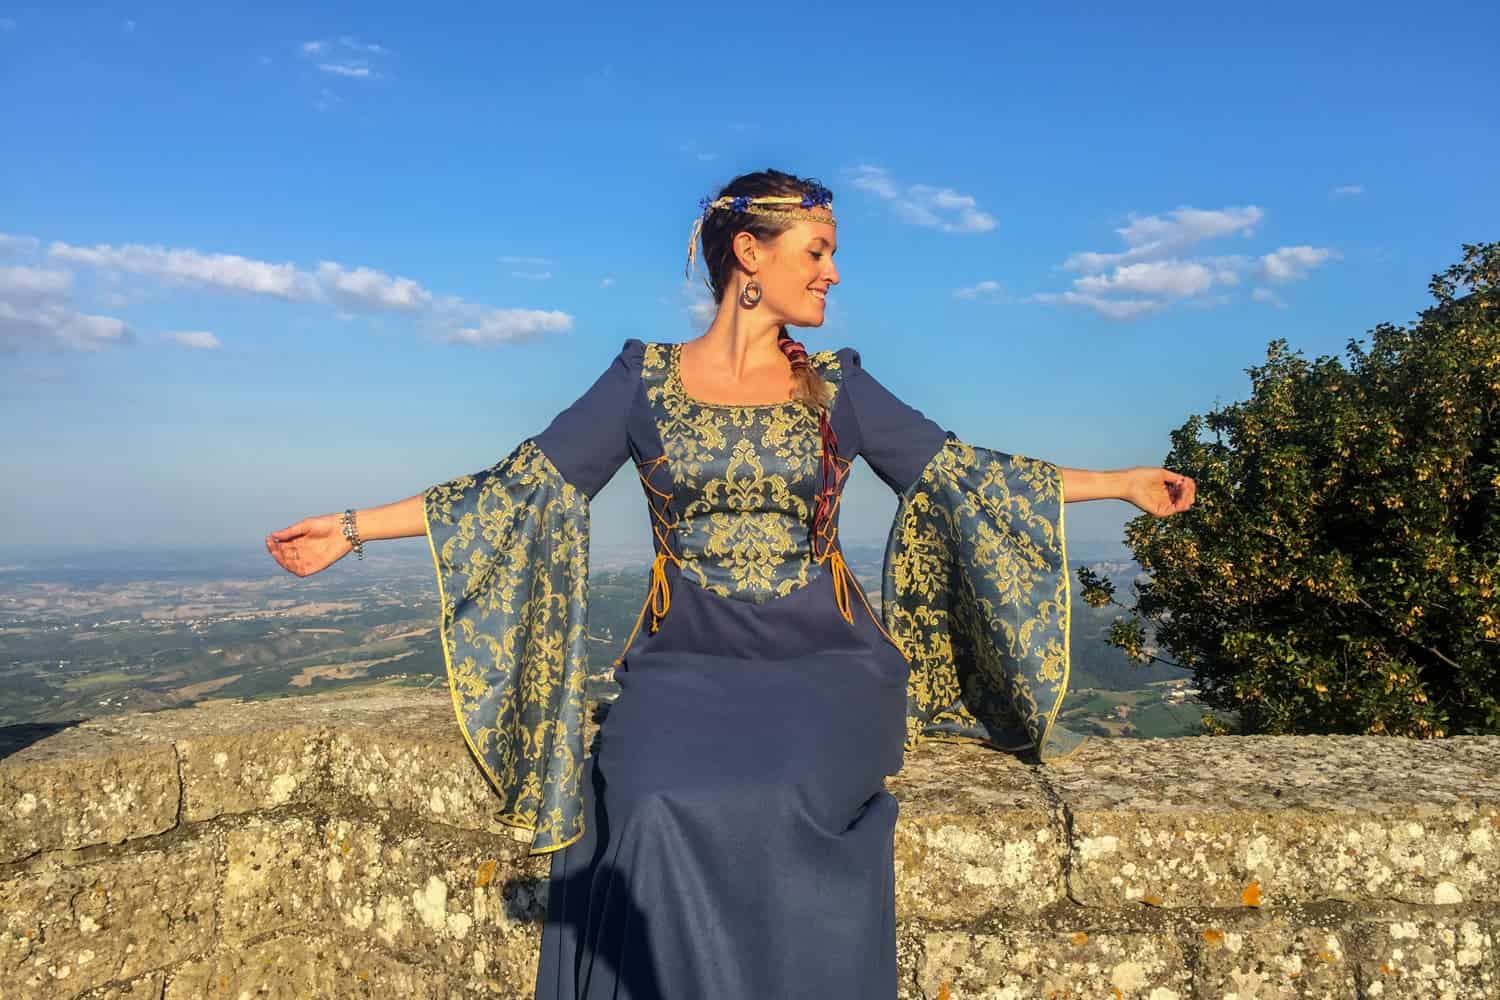 Medieval Festival in San Marino, Medieval Days costume